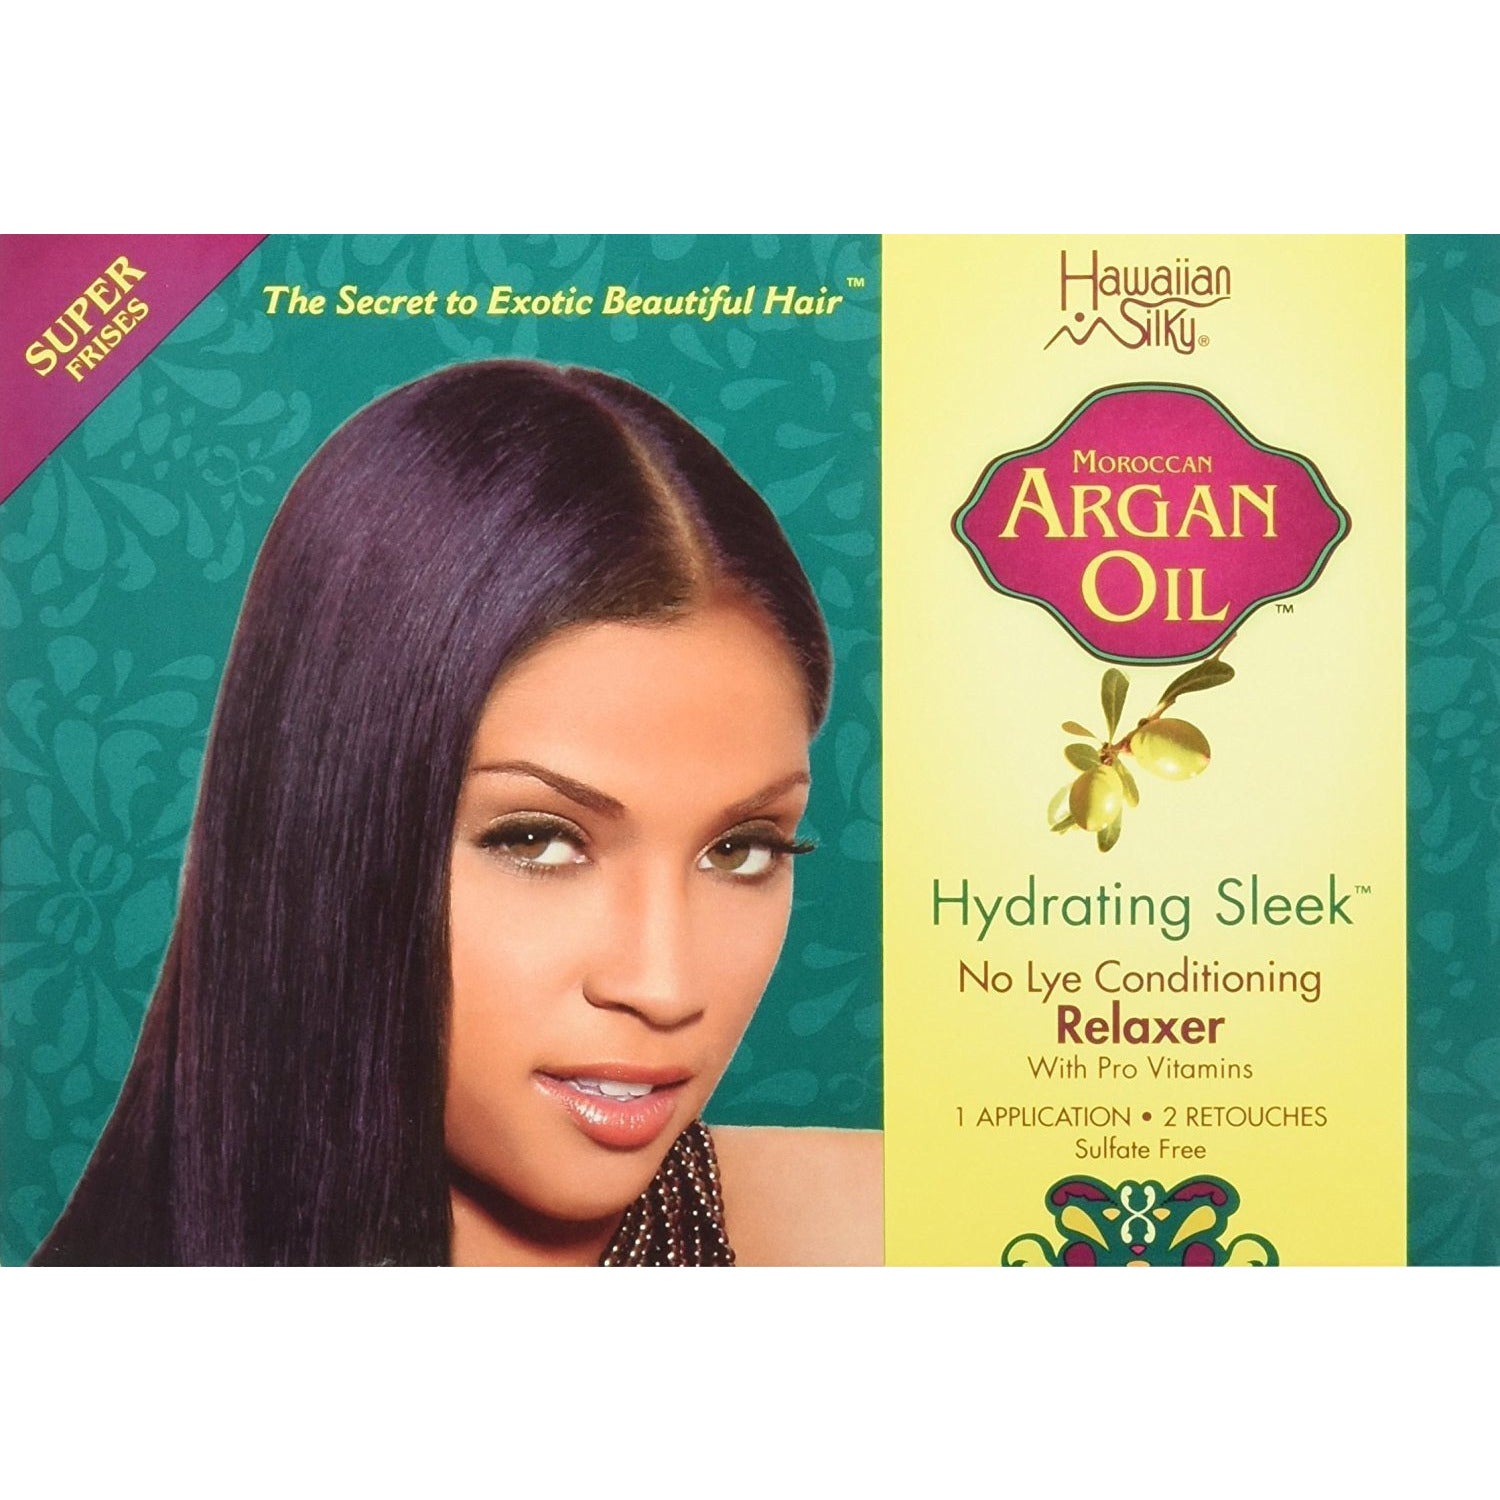 Hawaiian Silky Argan Oil No Lye Conditioning Relaxer Kit Super